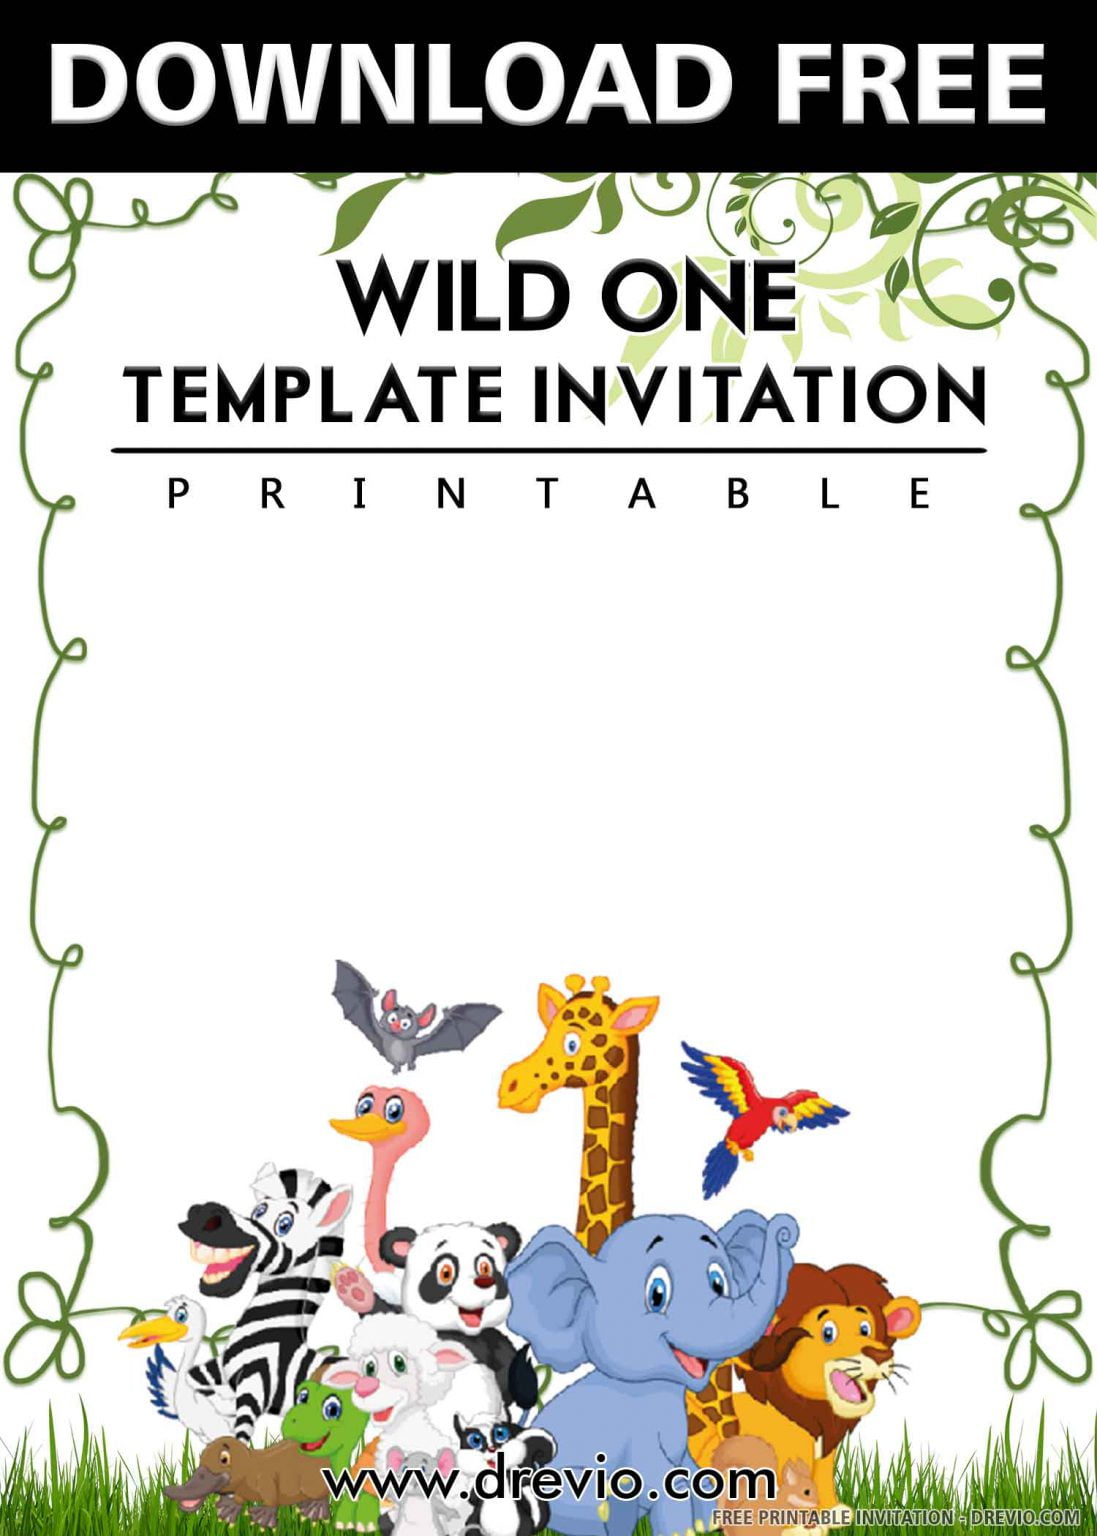 (FREE PRINTABLE) – Wild One Birthday Invitation Templates | Download Hundreds FREE PRINTABLE